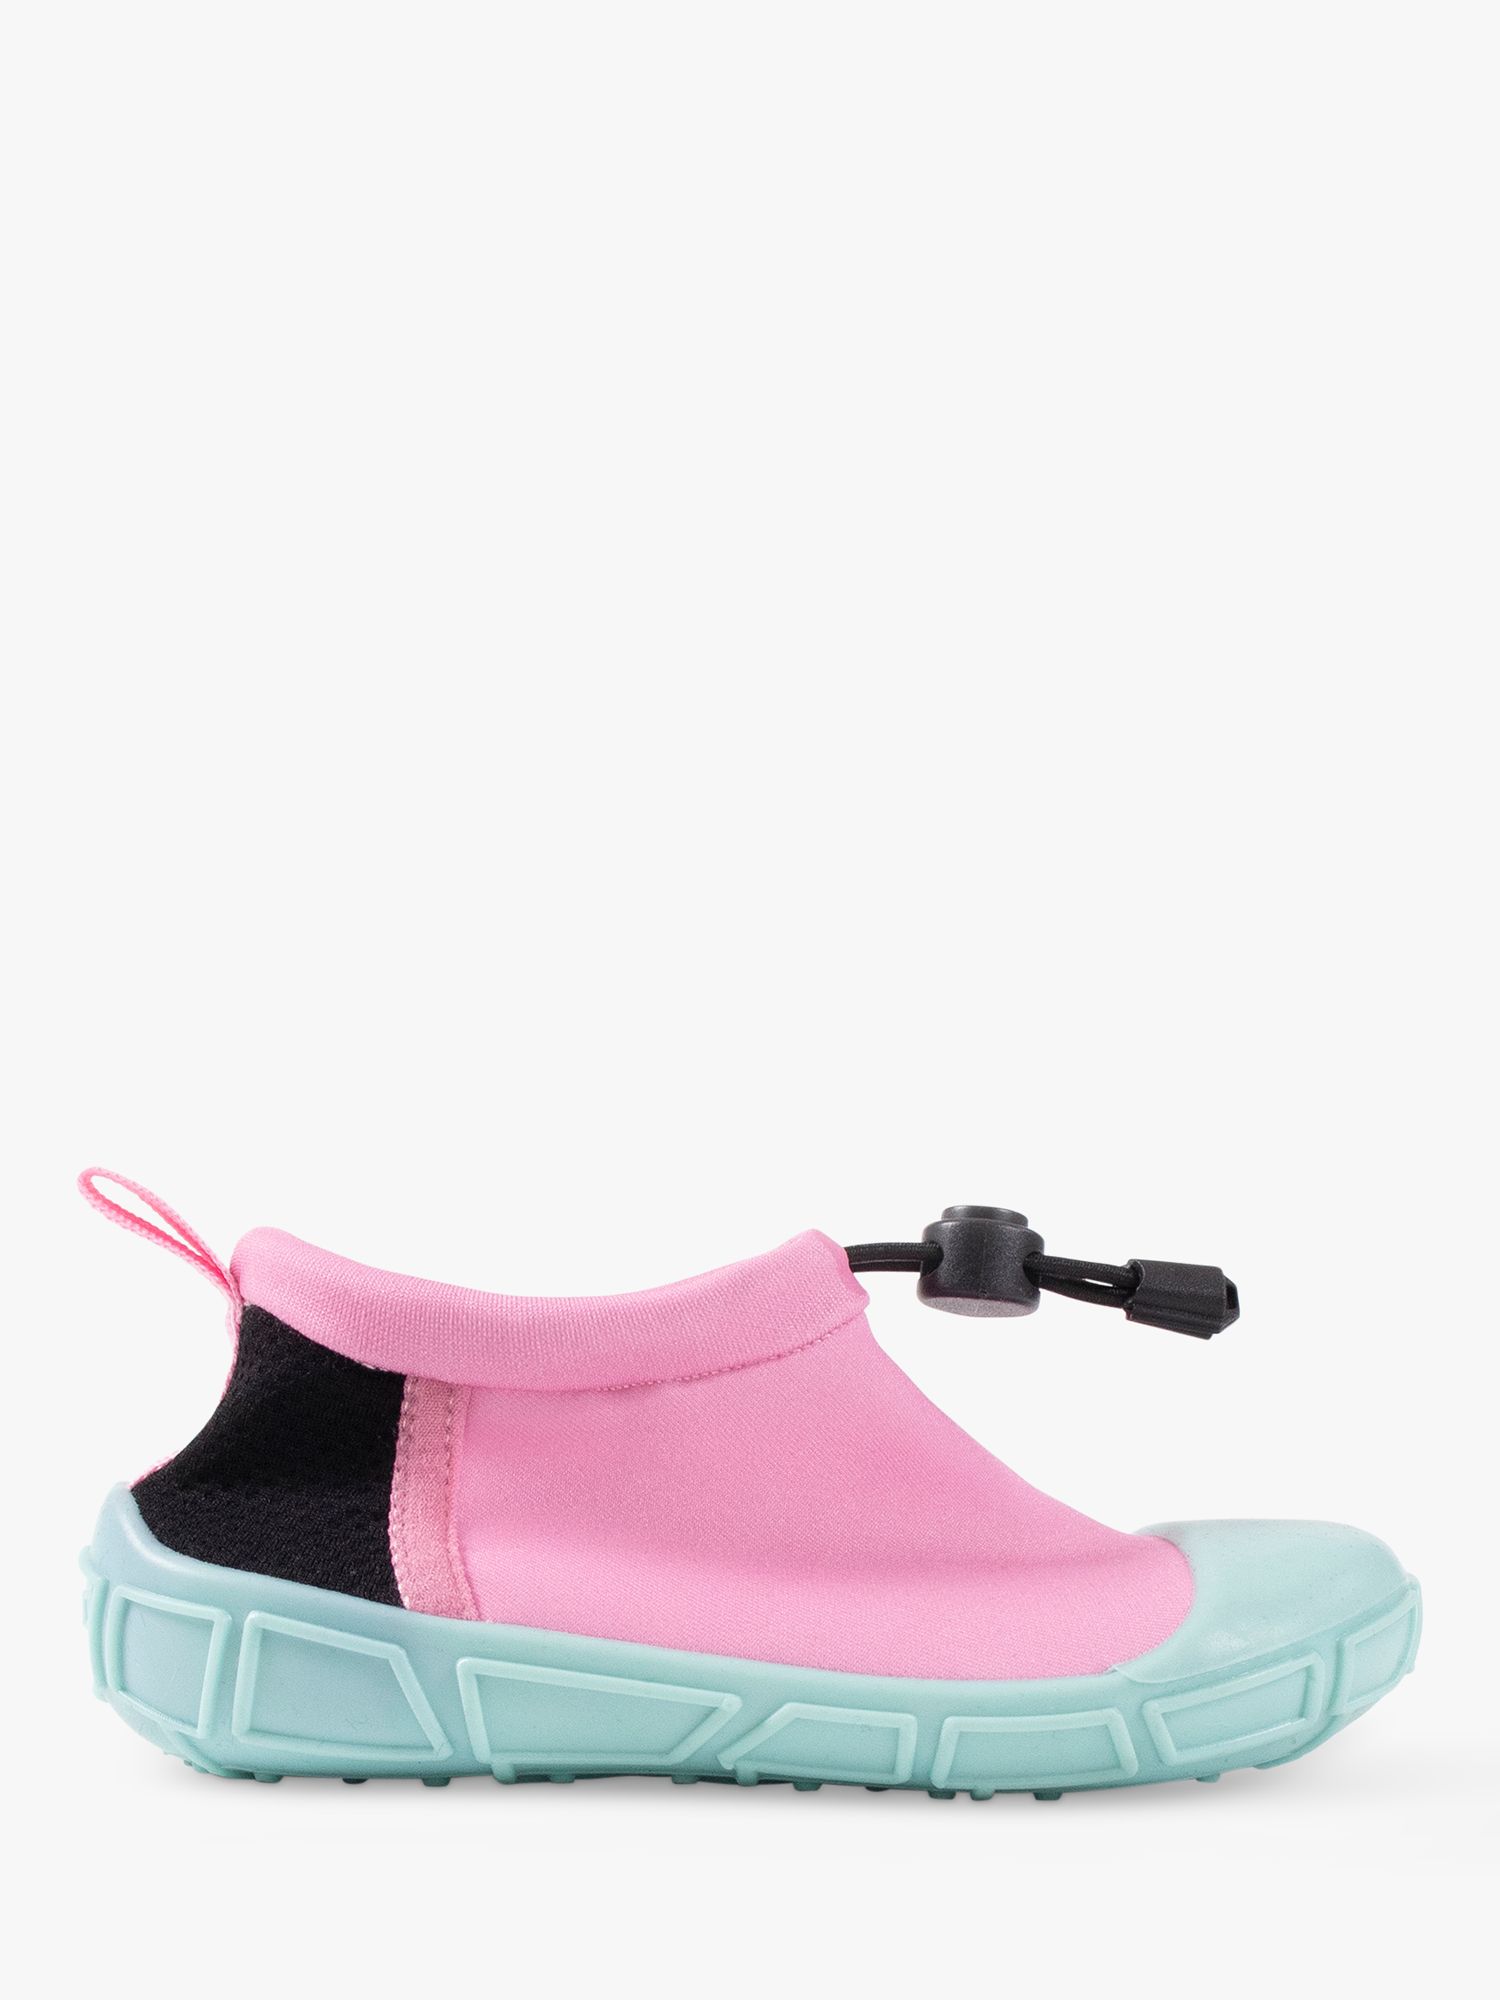 Turtl Kids' Recycled Toggle Aqua Shoes, Pink, 2-3